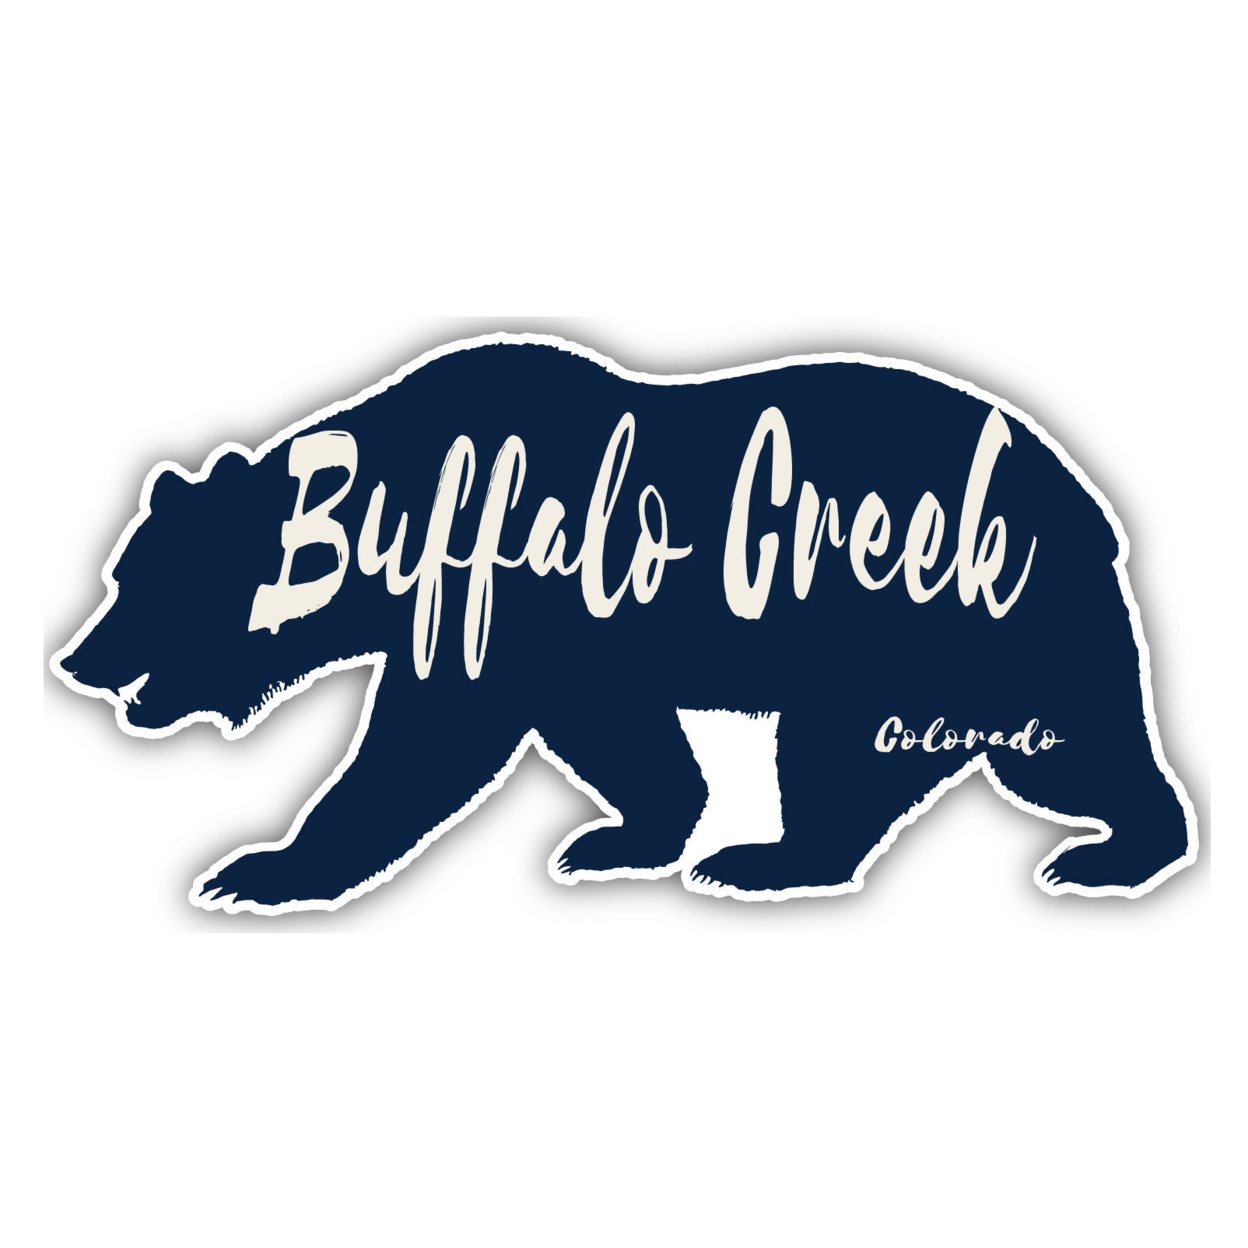 Buffalo Creek Colorado Souvenir Decorative Stickers (Choose Theme And Size) - 4-Pack, 6-Inch, Bear